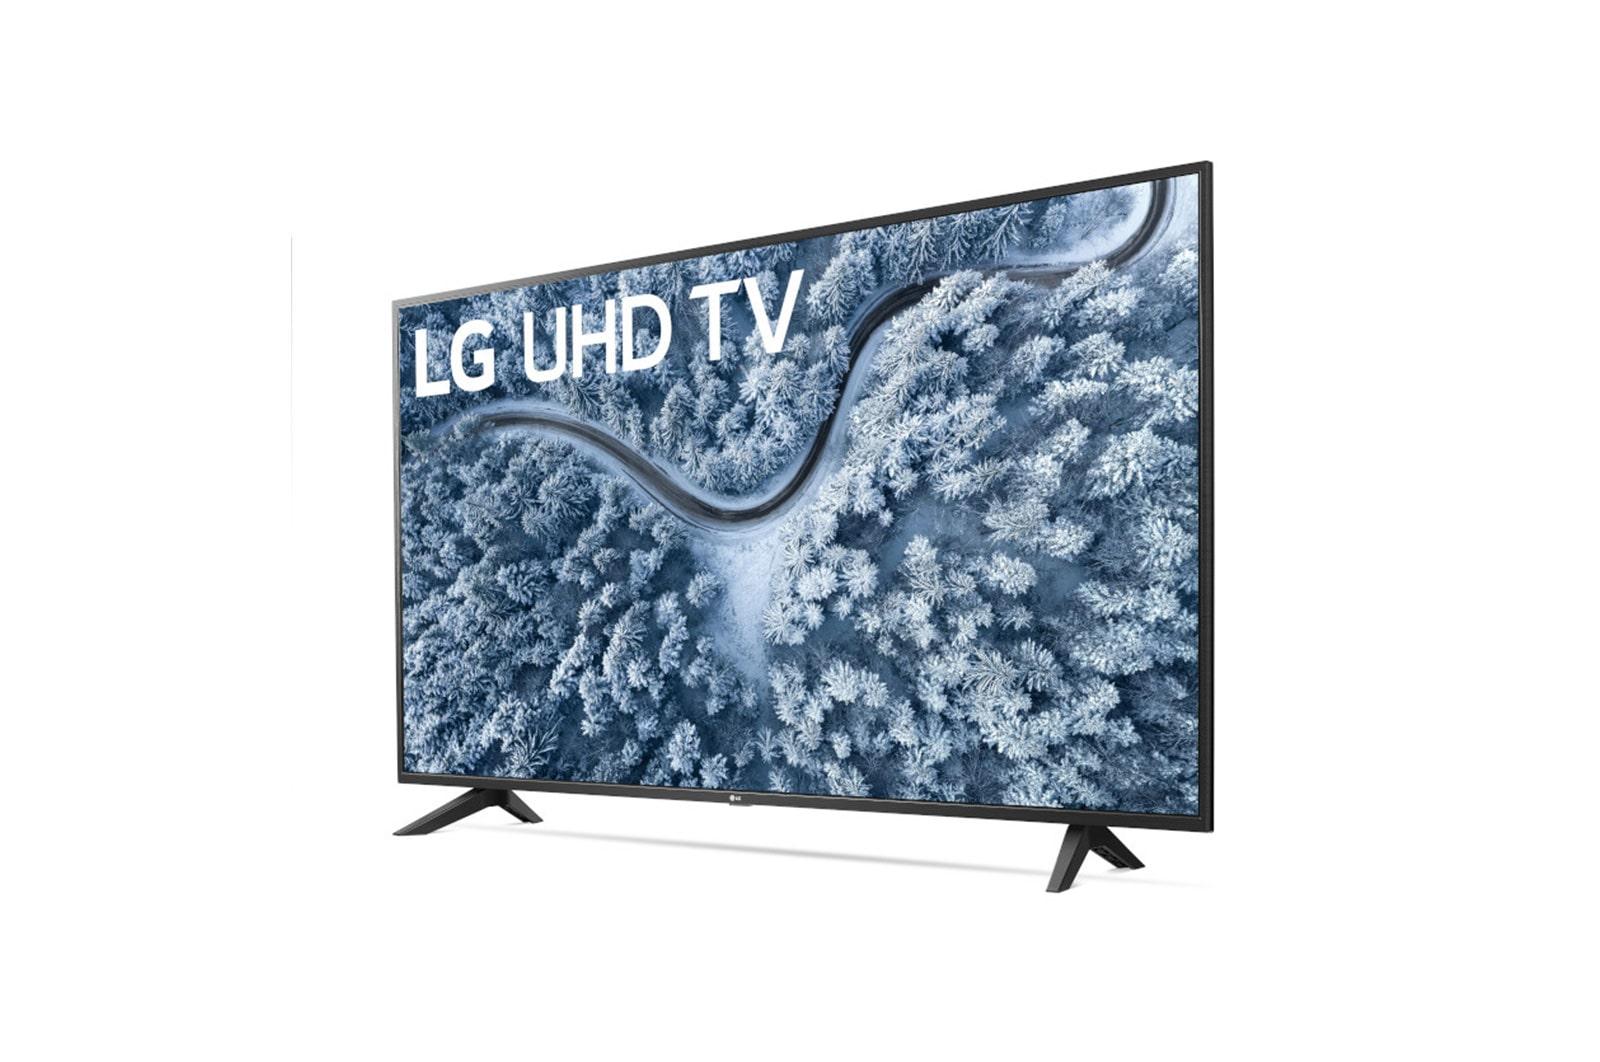 LG UHD 70 Series 65 inch Class 4K Smart UHD TV (64.5'' Diag)